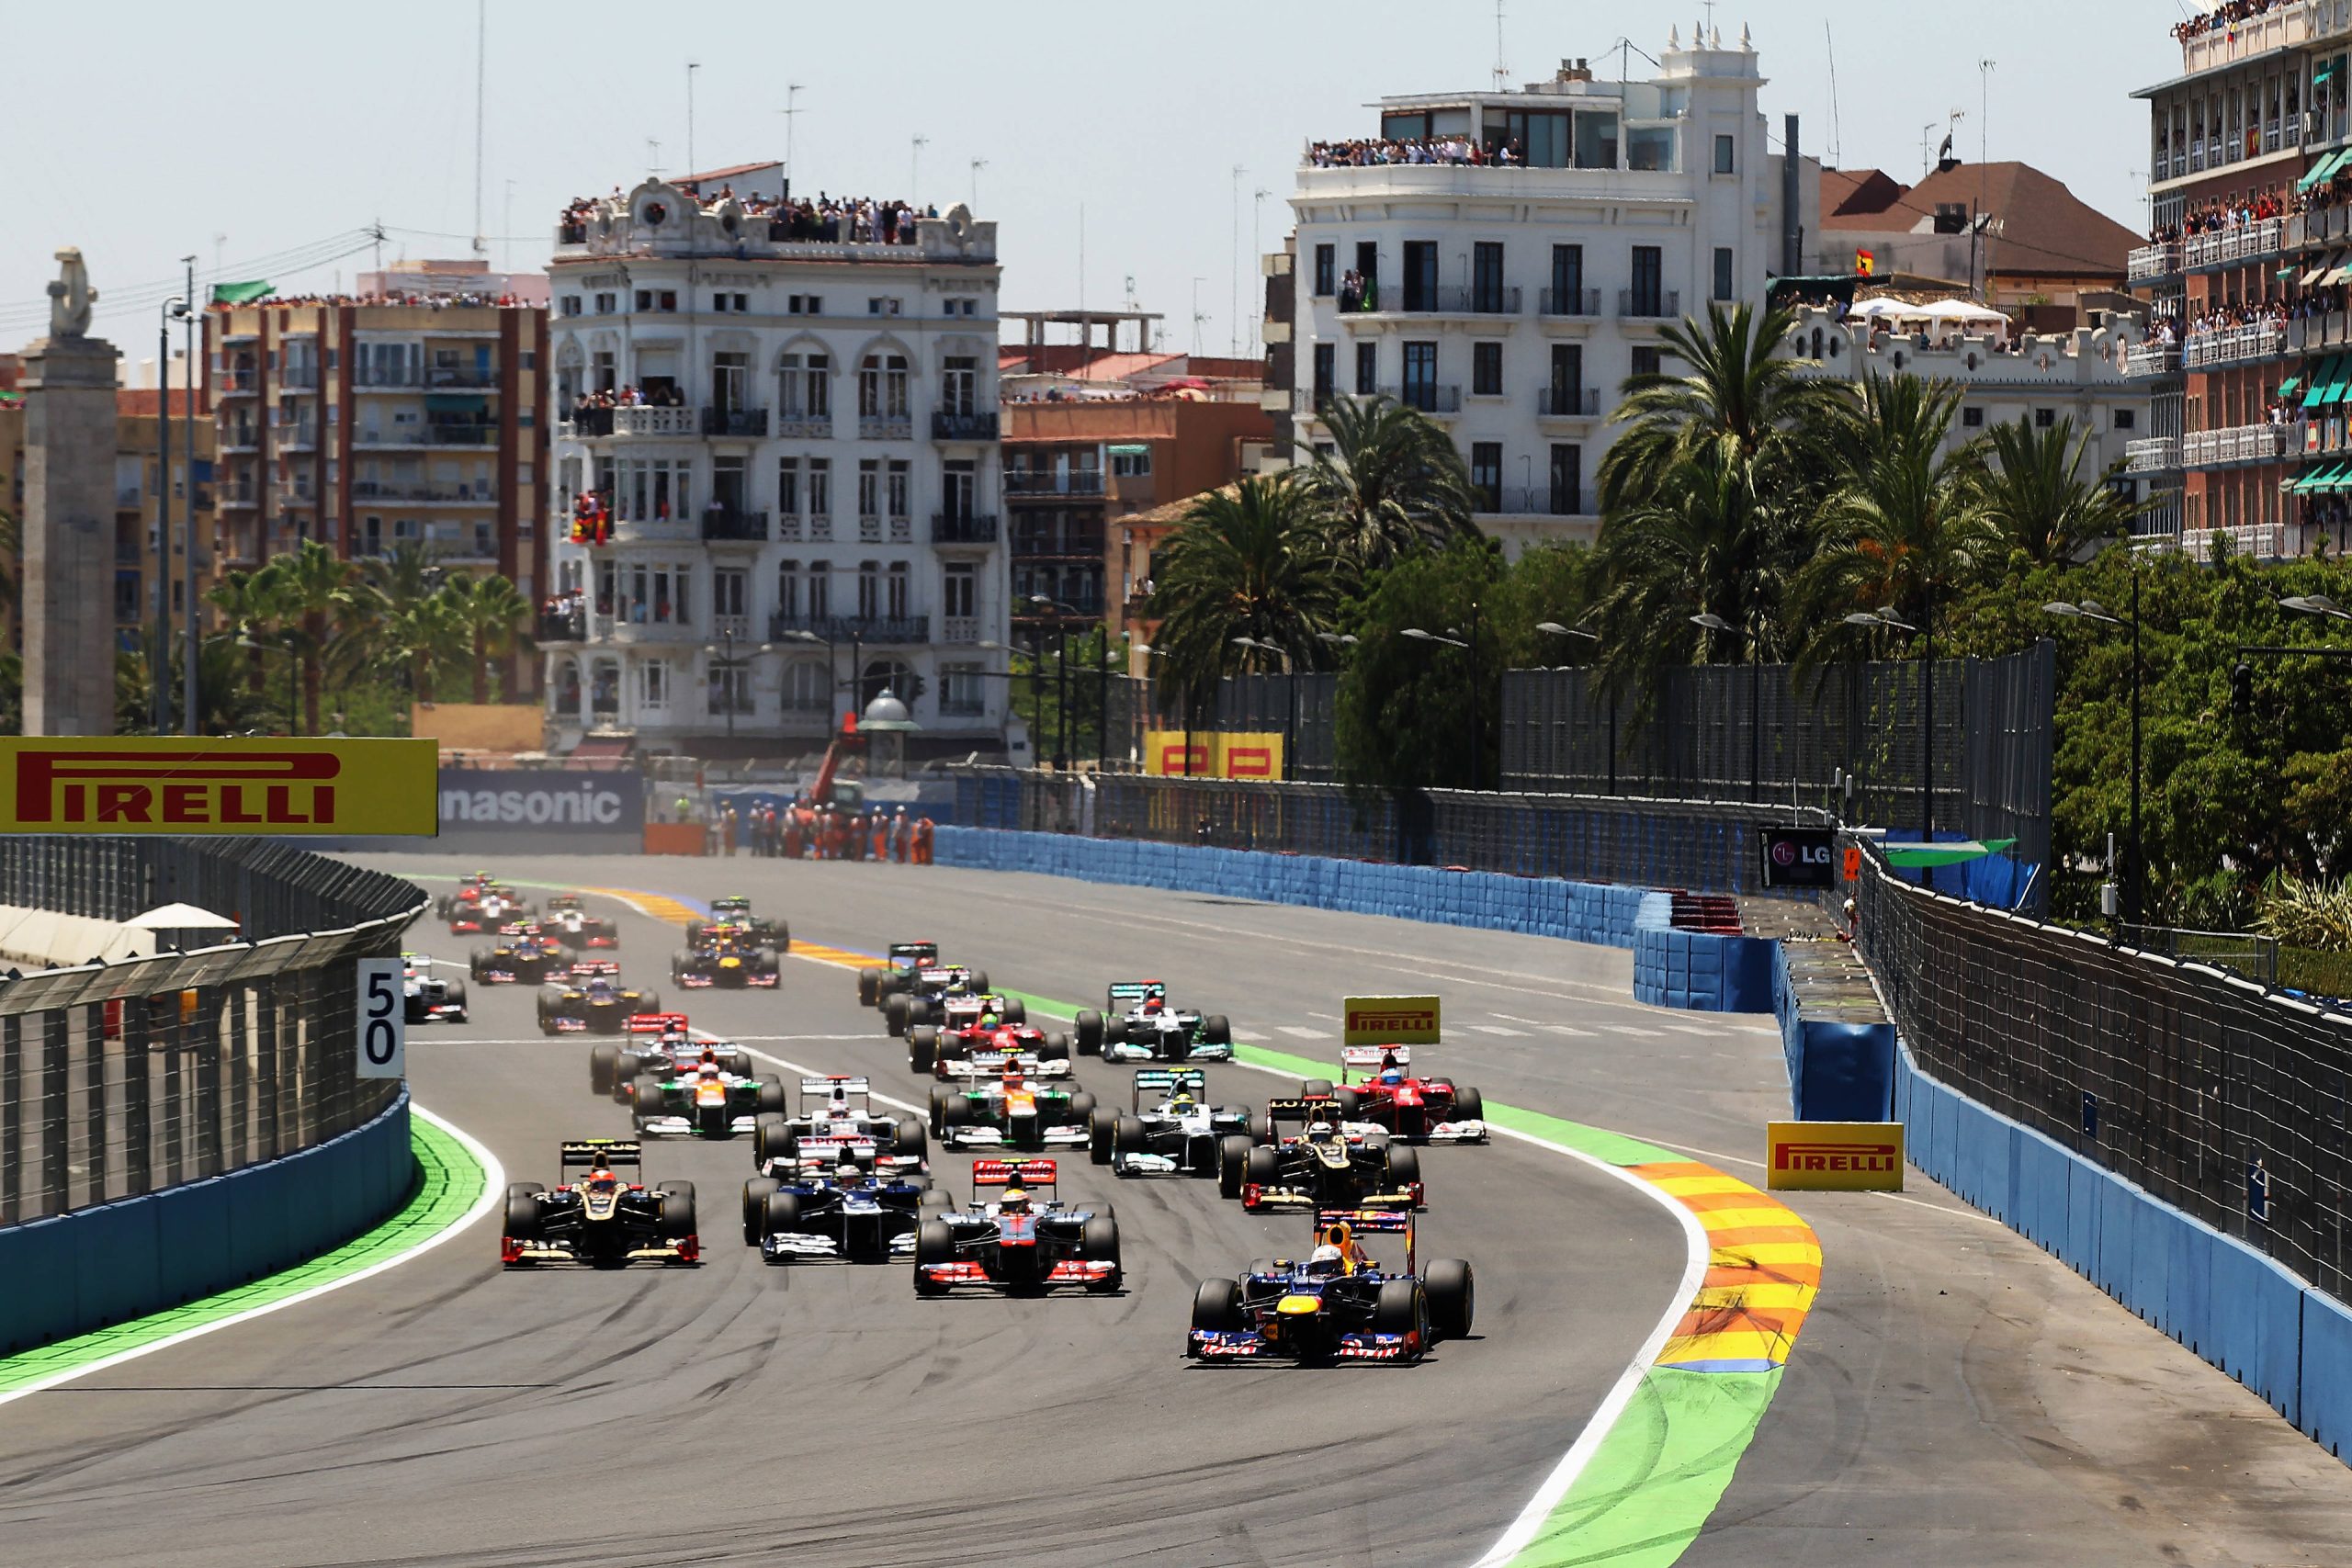 F1 Circuits The Valencia Street Circuit